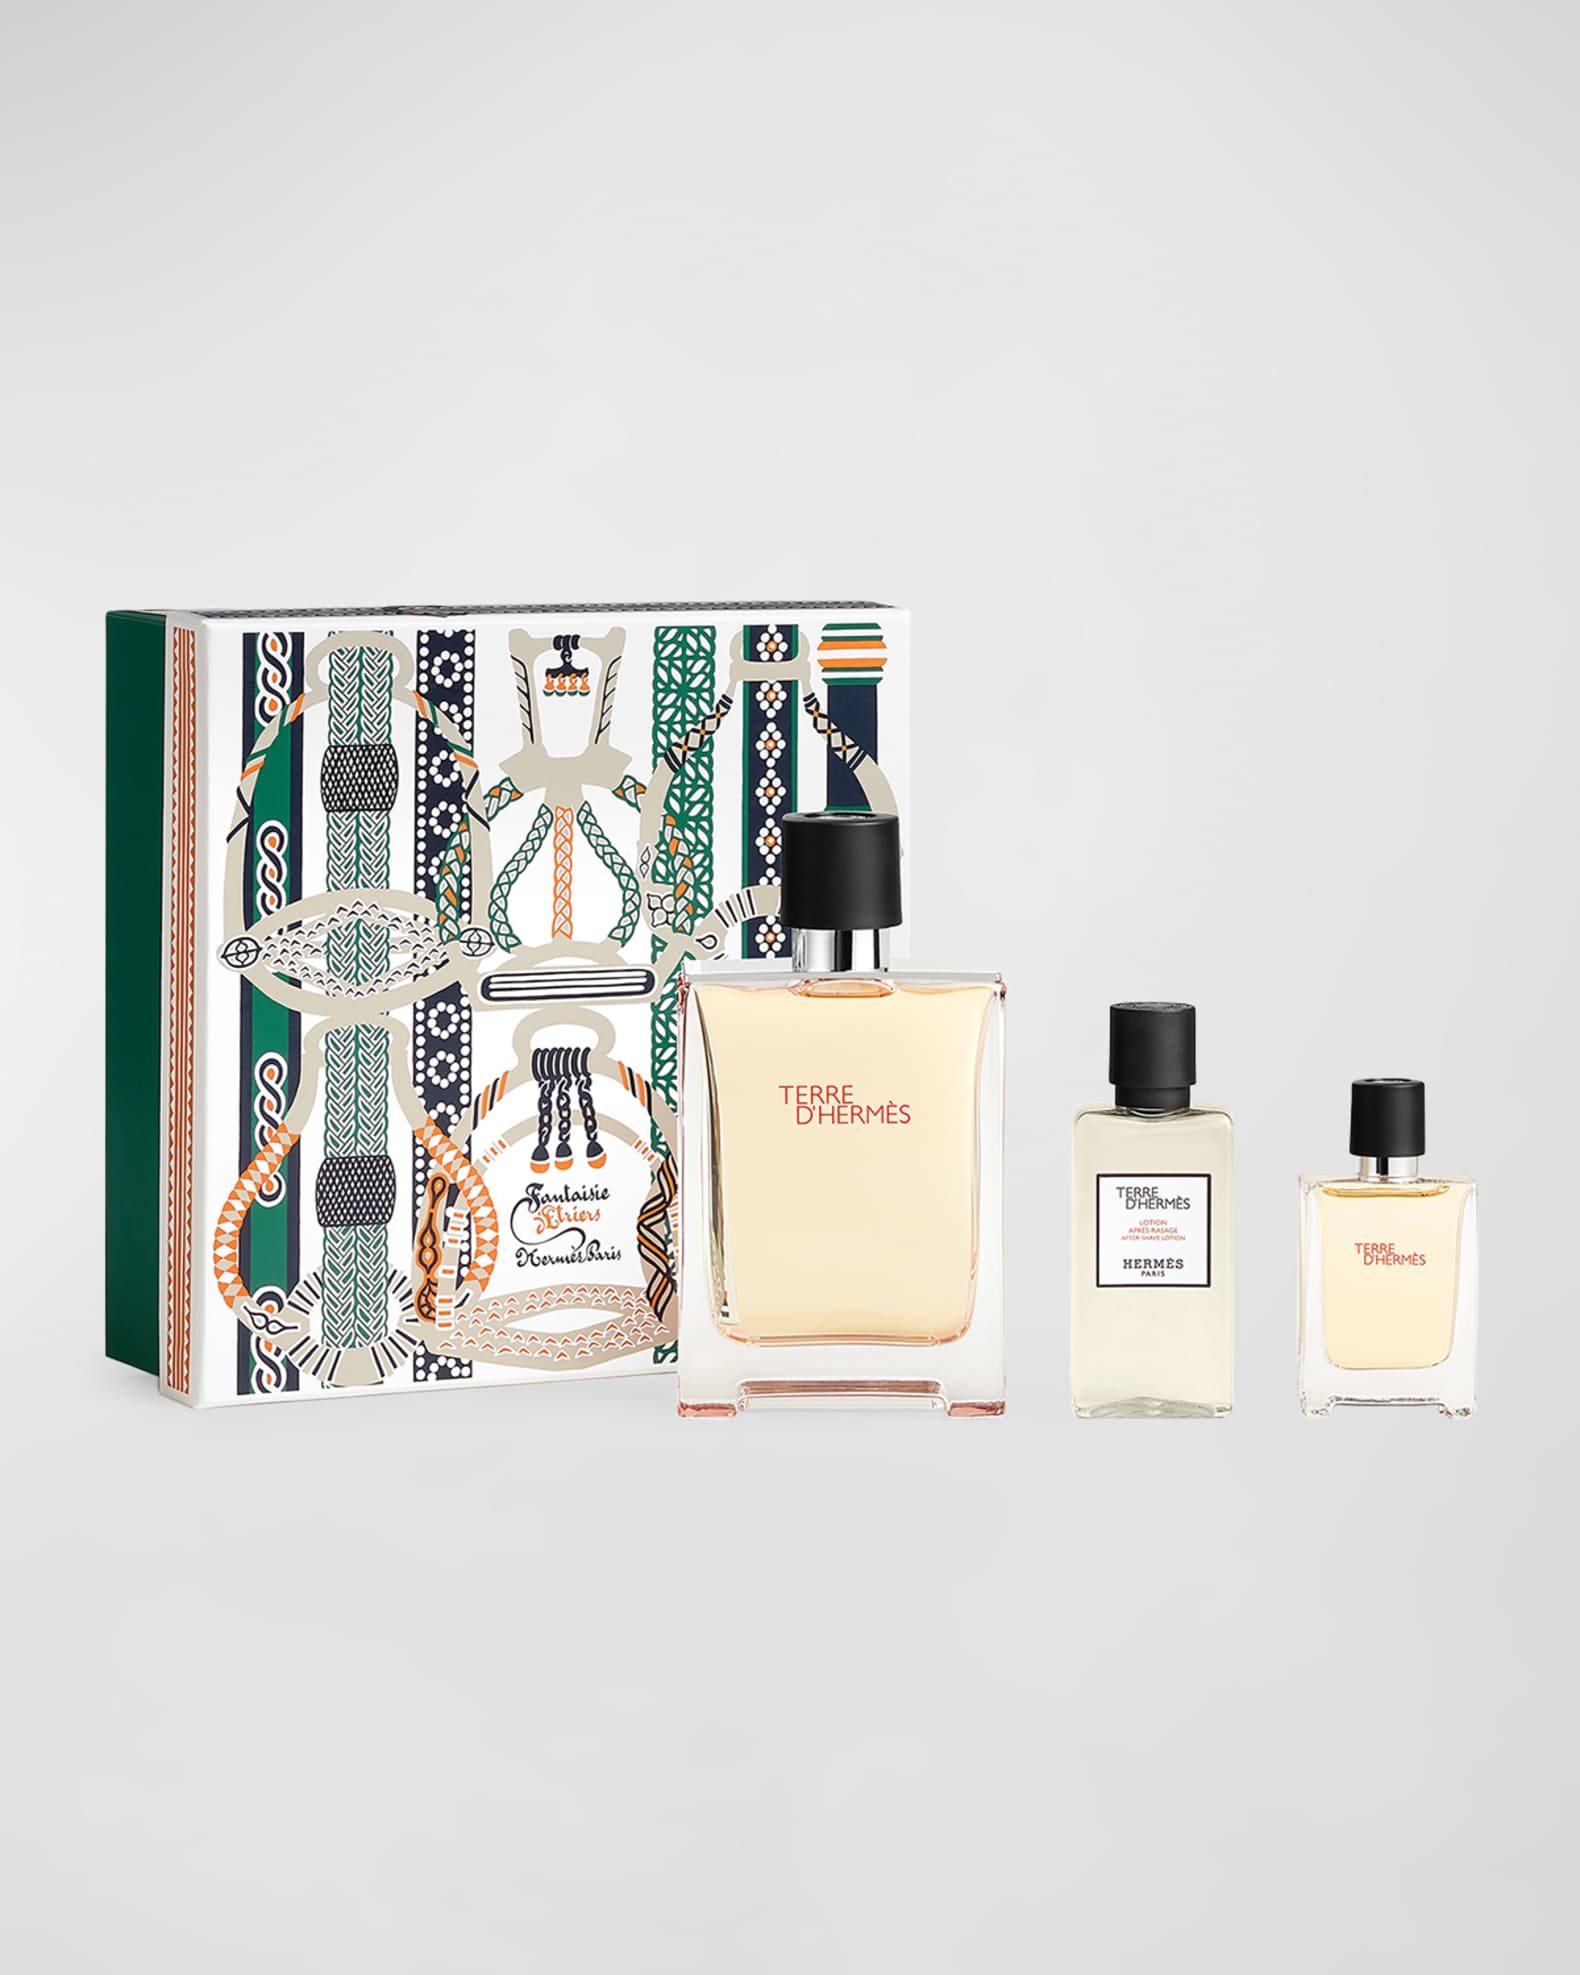 Christian+Louboutin+Perfume+Set+3+X+5ml+Parfum+Gift+Set for sale online